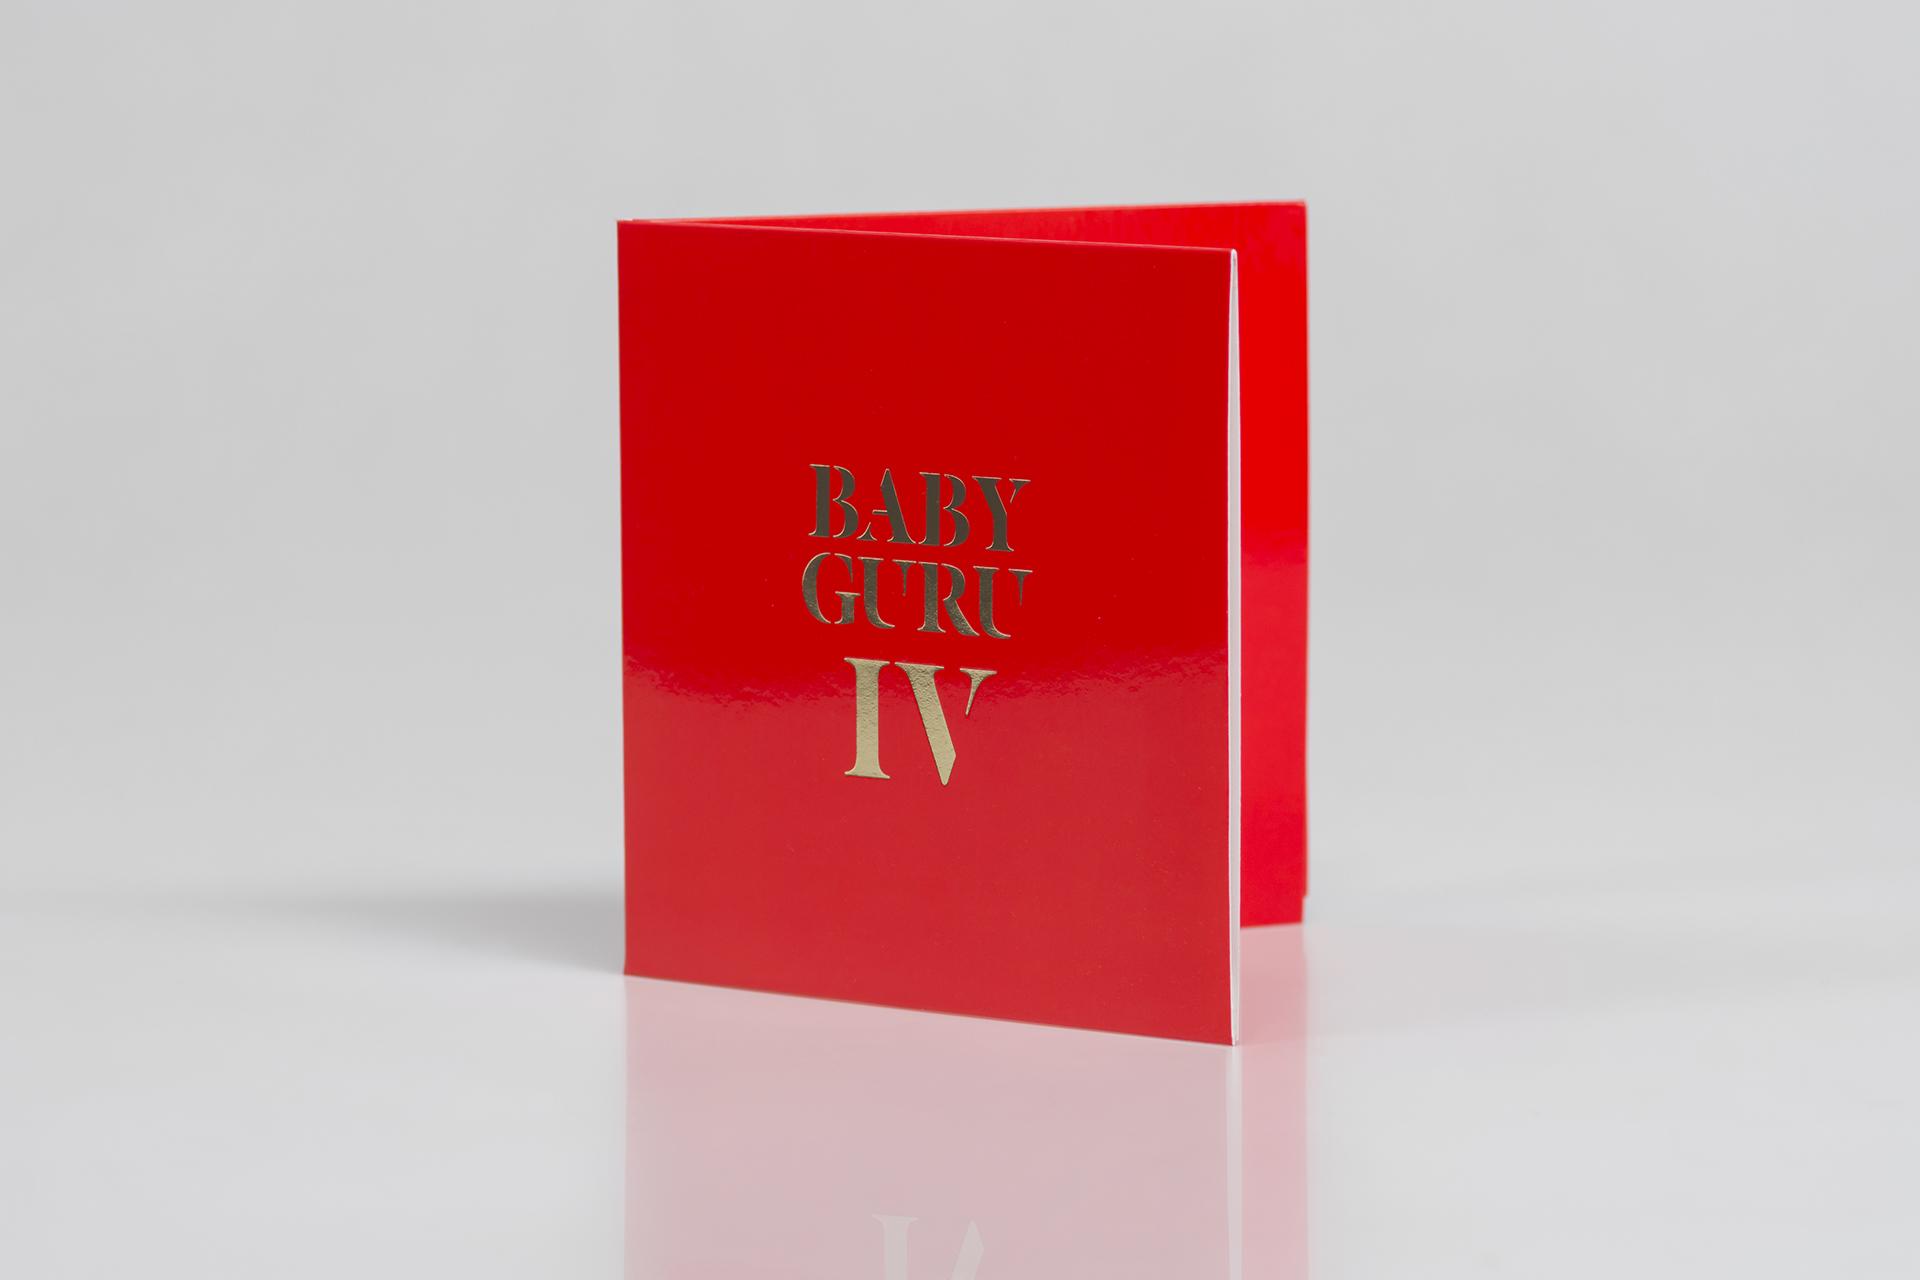 Baby Guru - IV CD cover